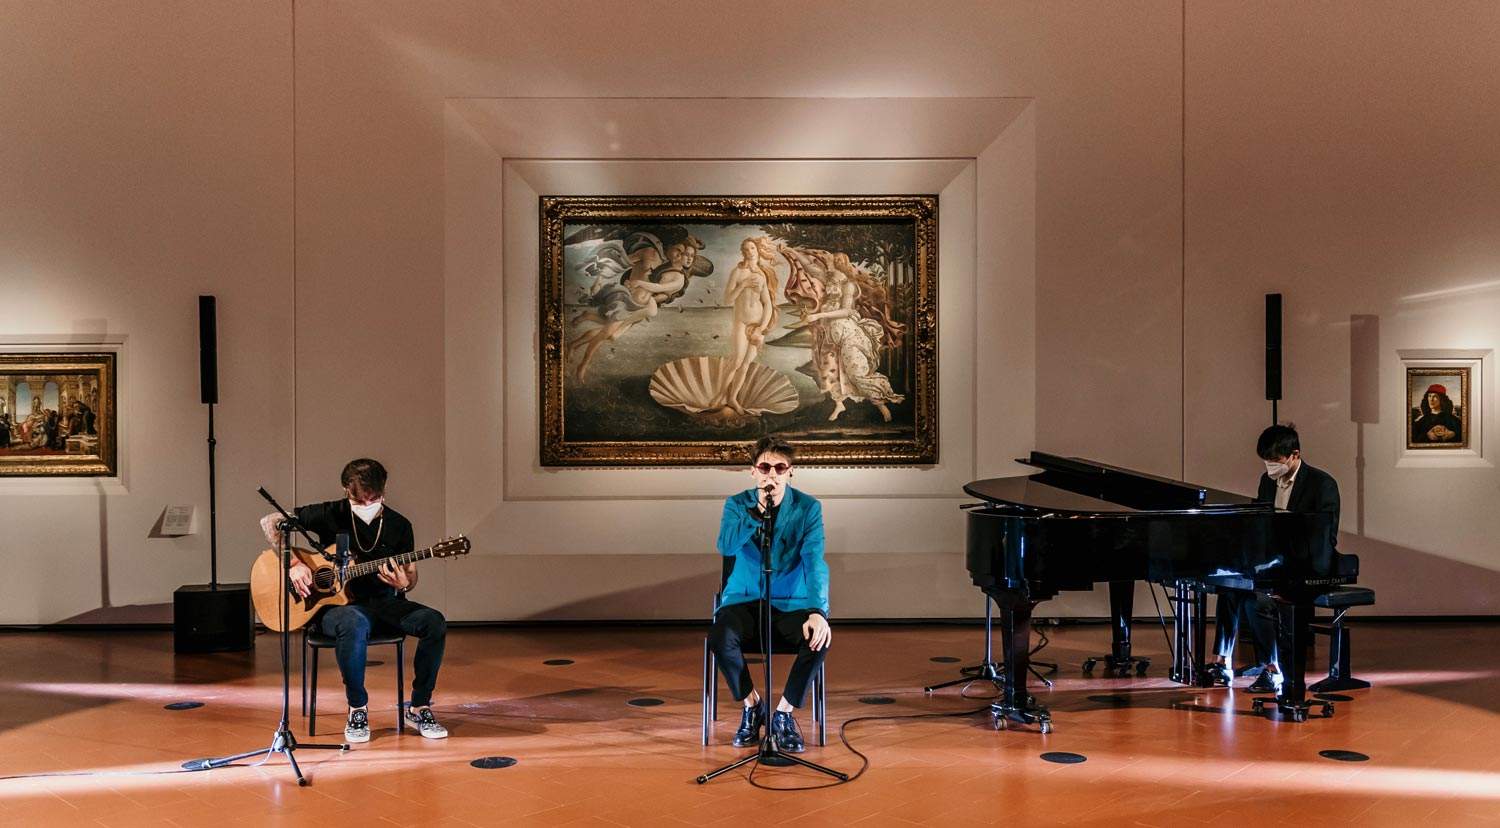 Uffizi, singer Emanuele Aloia shoots video in front of Botticelli's Venus